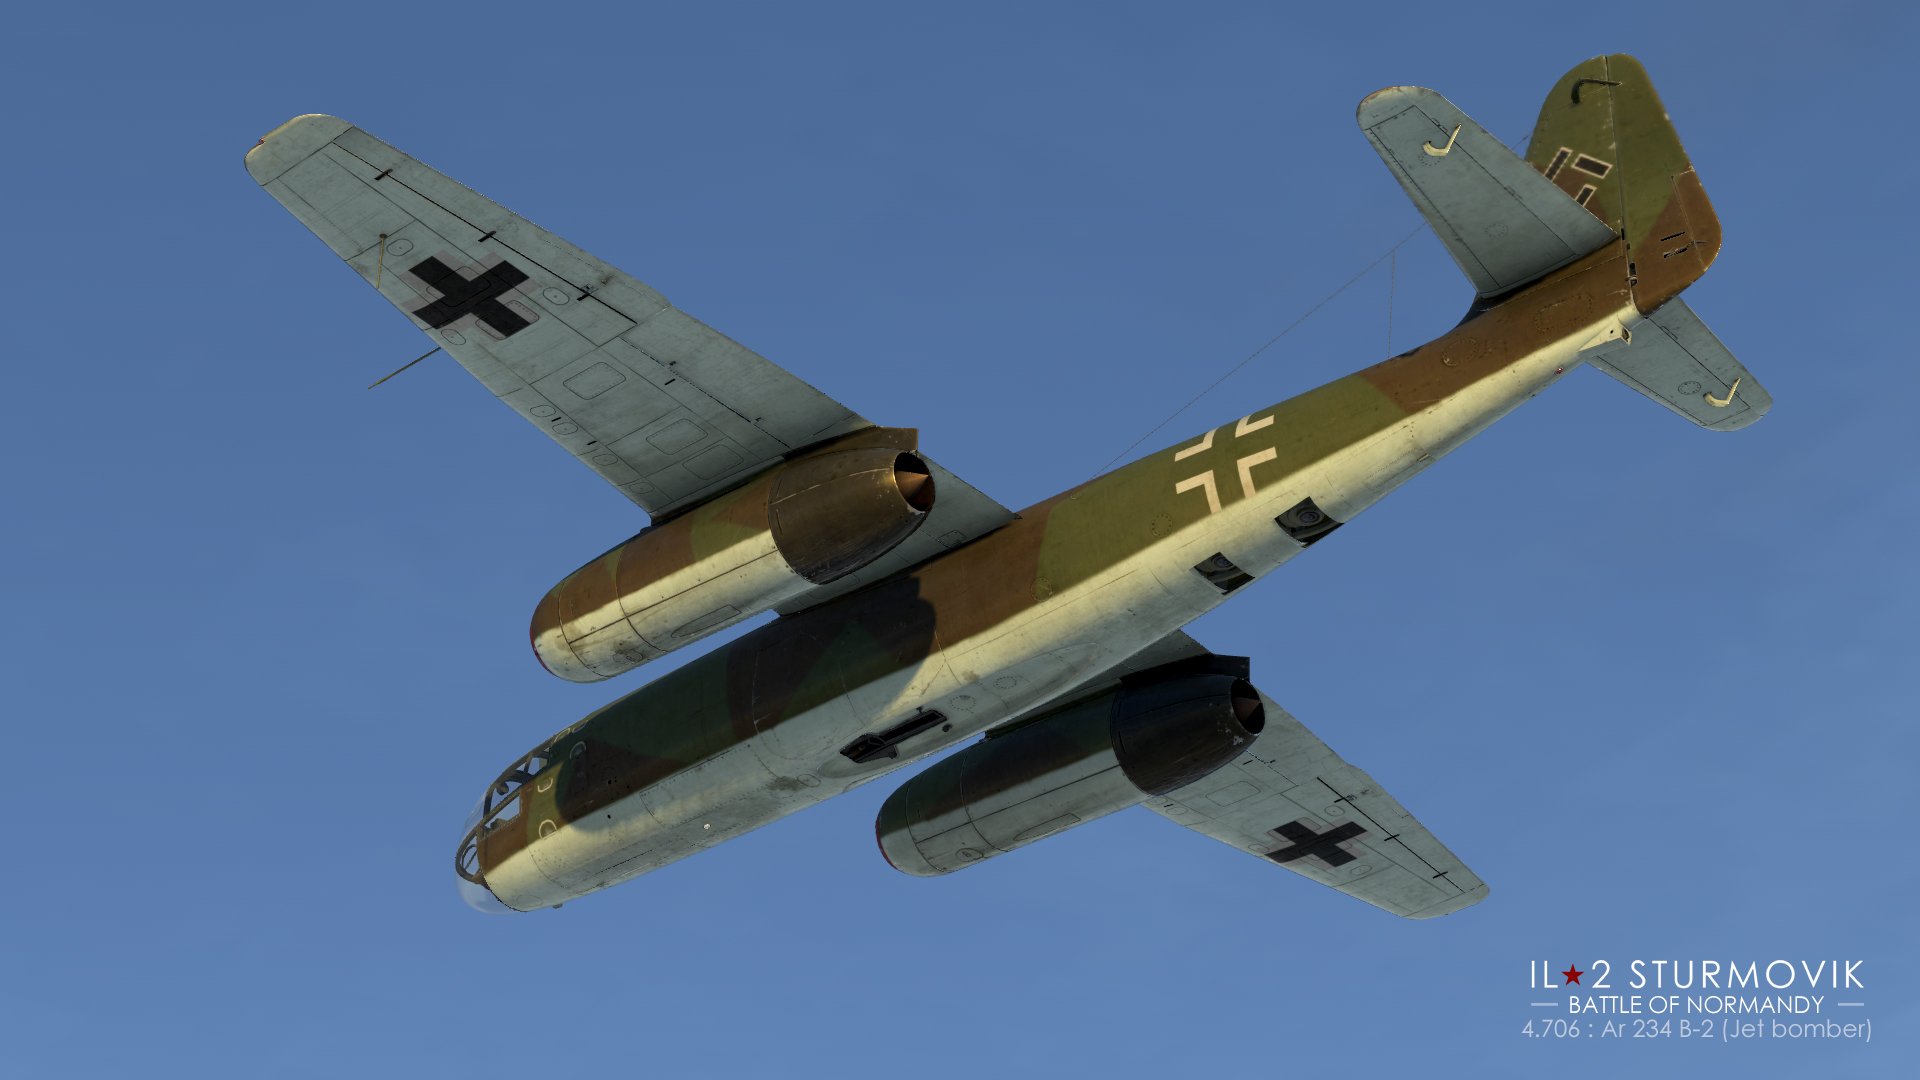 General 1920x1080 video games World War II Arado Ar 234 screen shot IL-2 Sturmovik (video game) Arado German aircraft